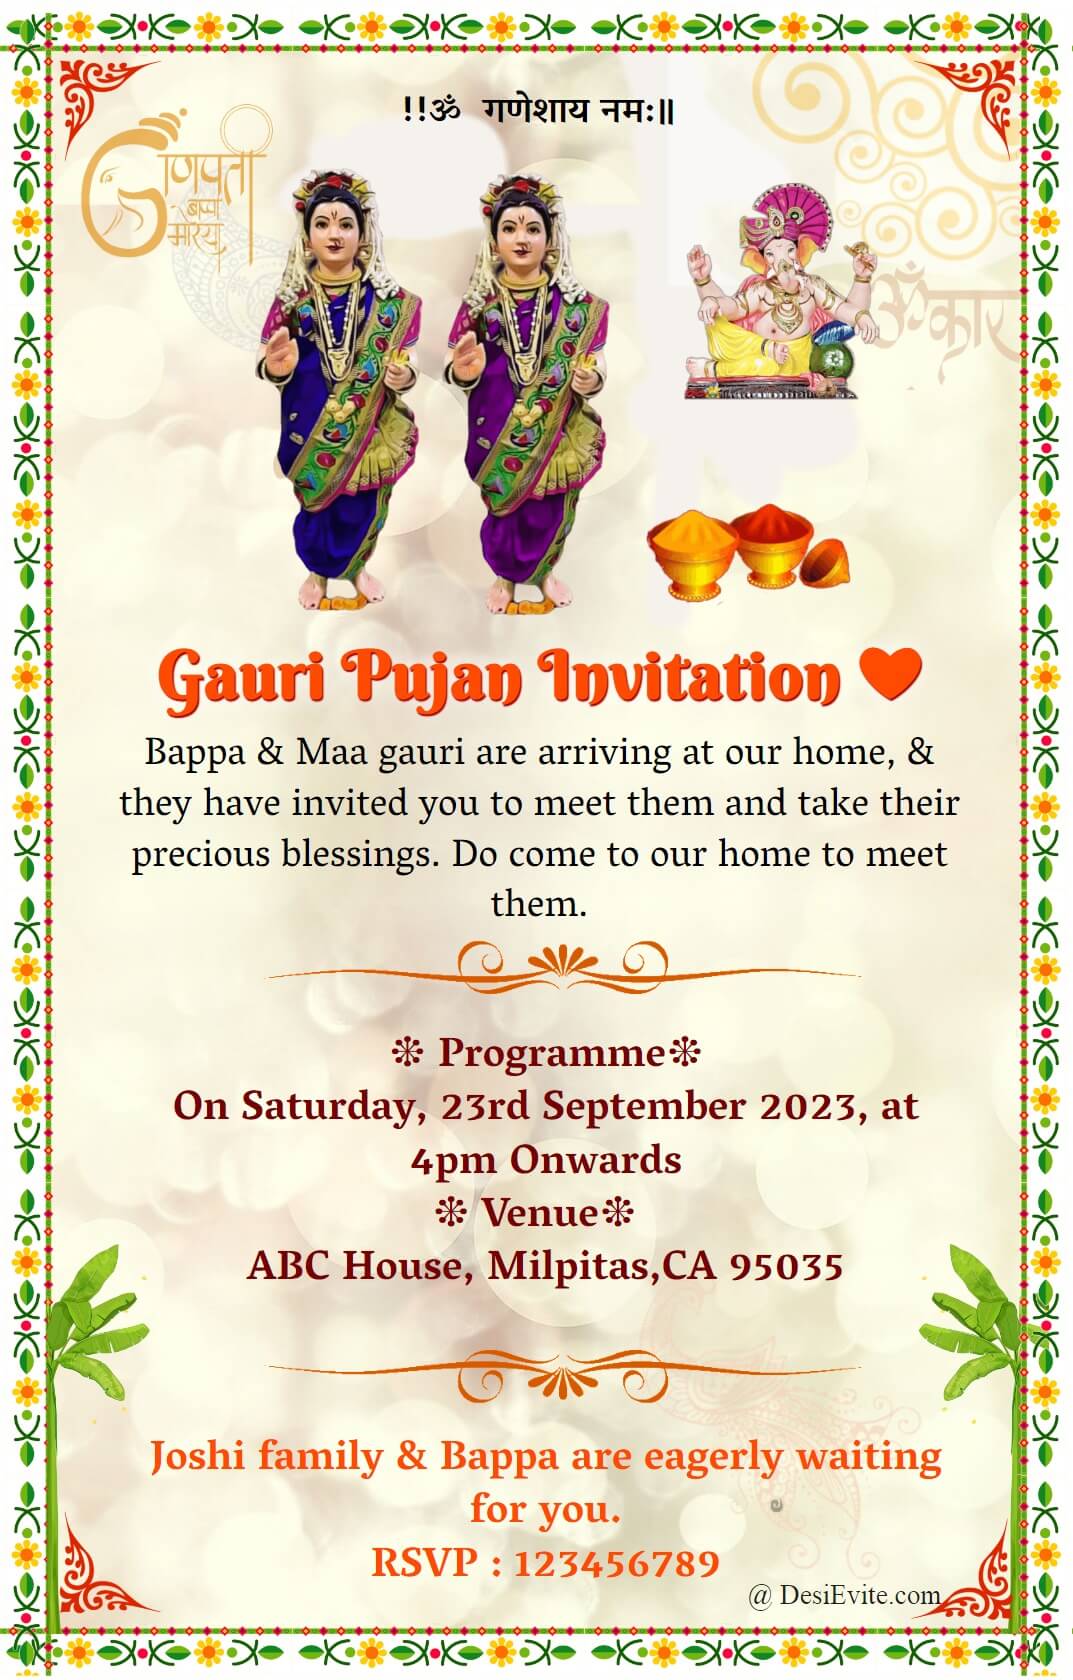 Gauri Pujan Invitation ecard flower border 52 